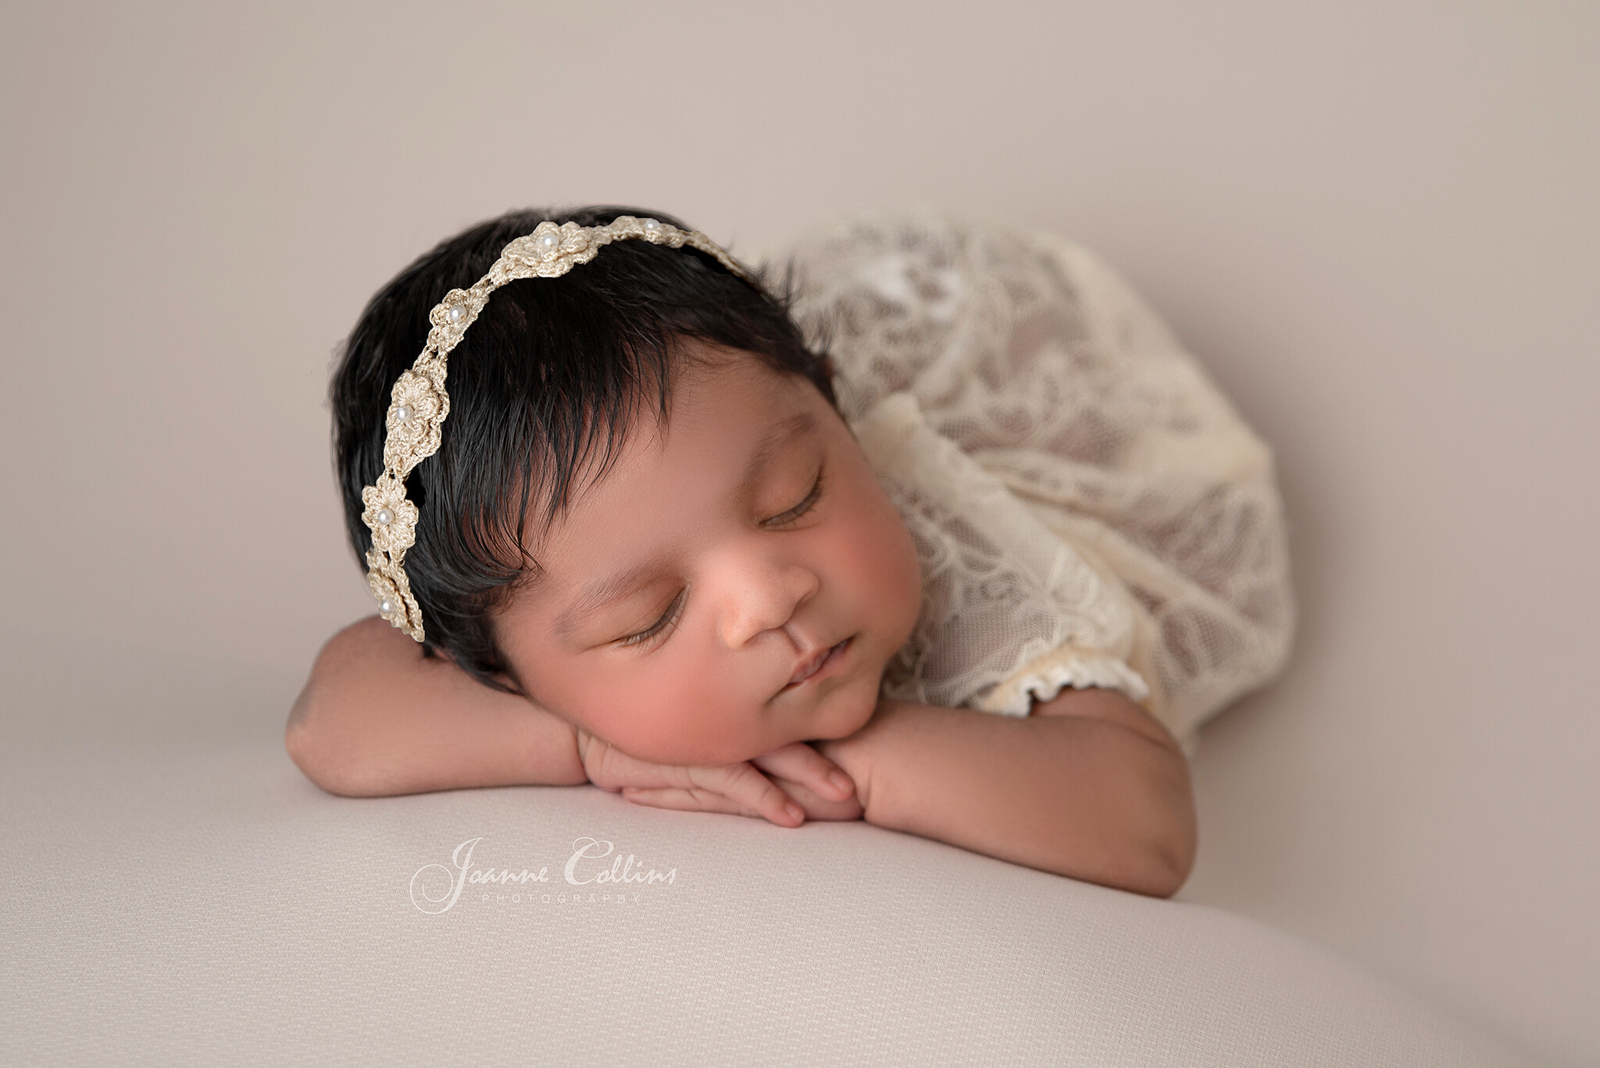 newborn photographer sittingbourne baby girl 9 days new in cute dress